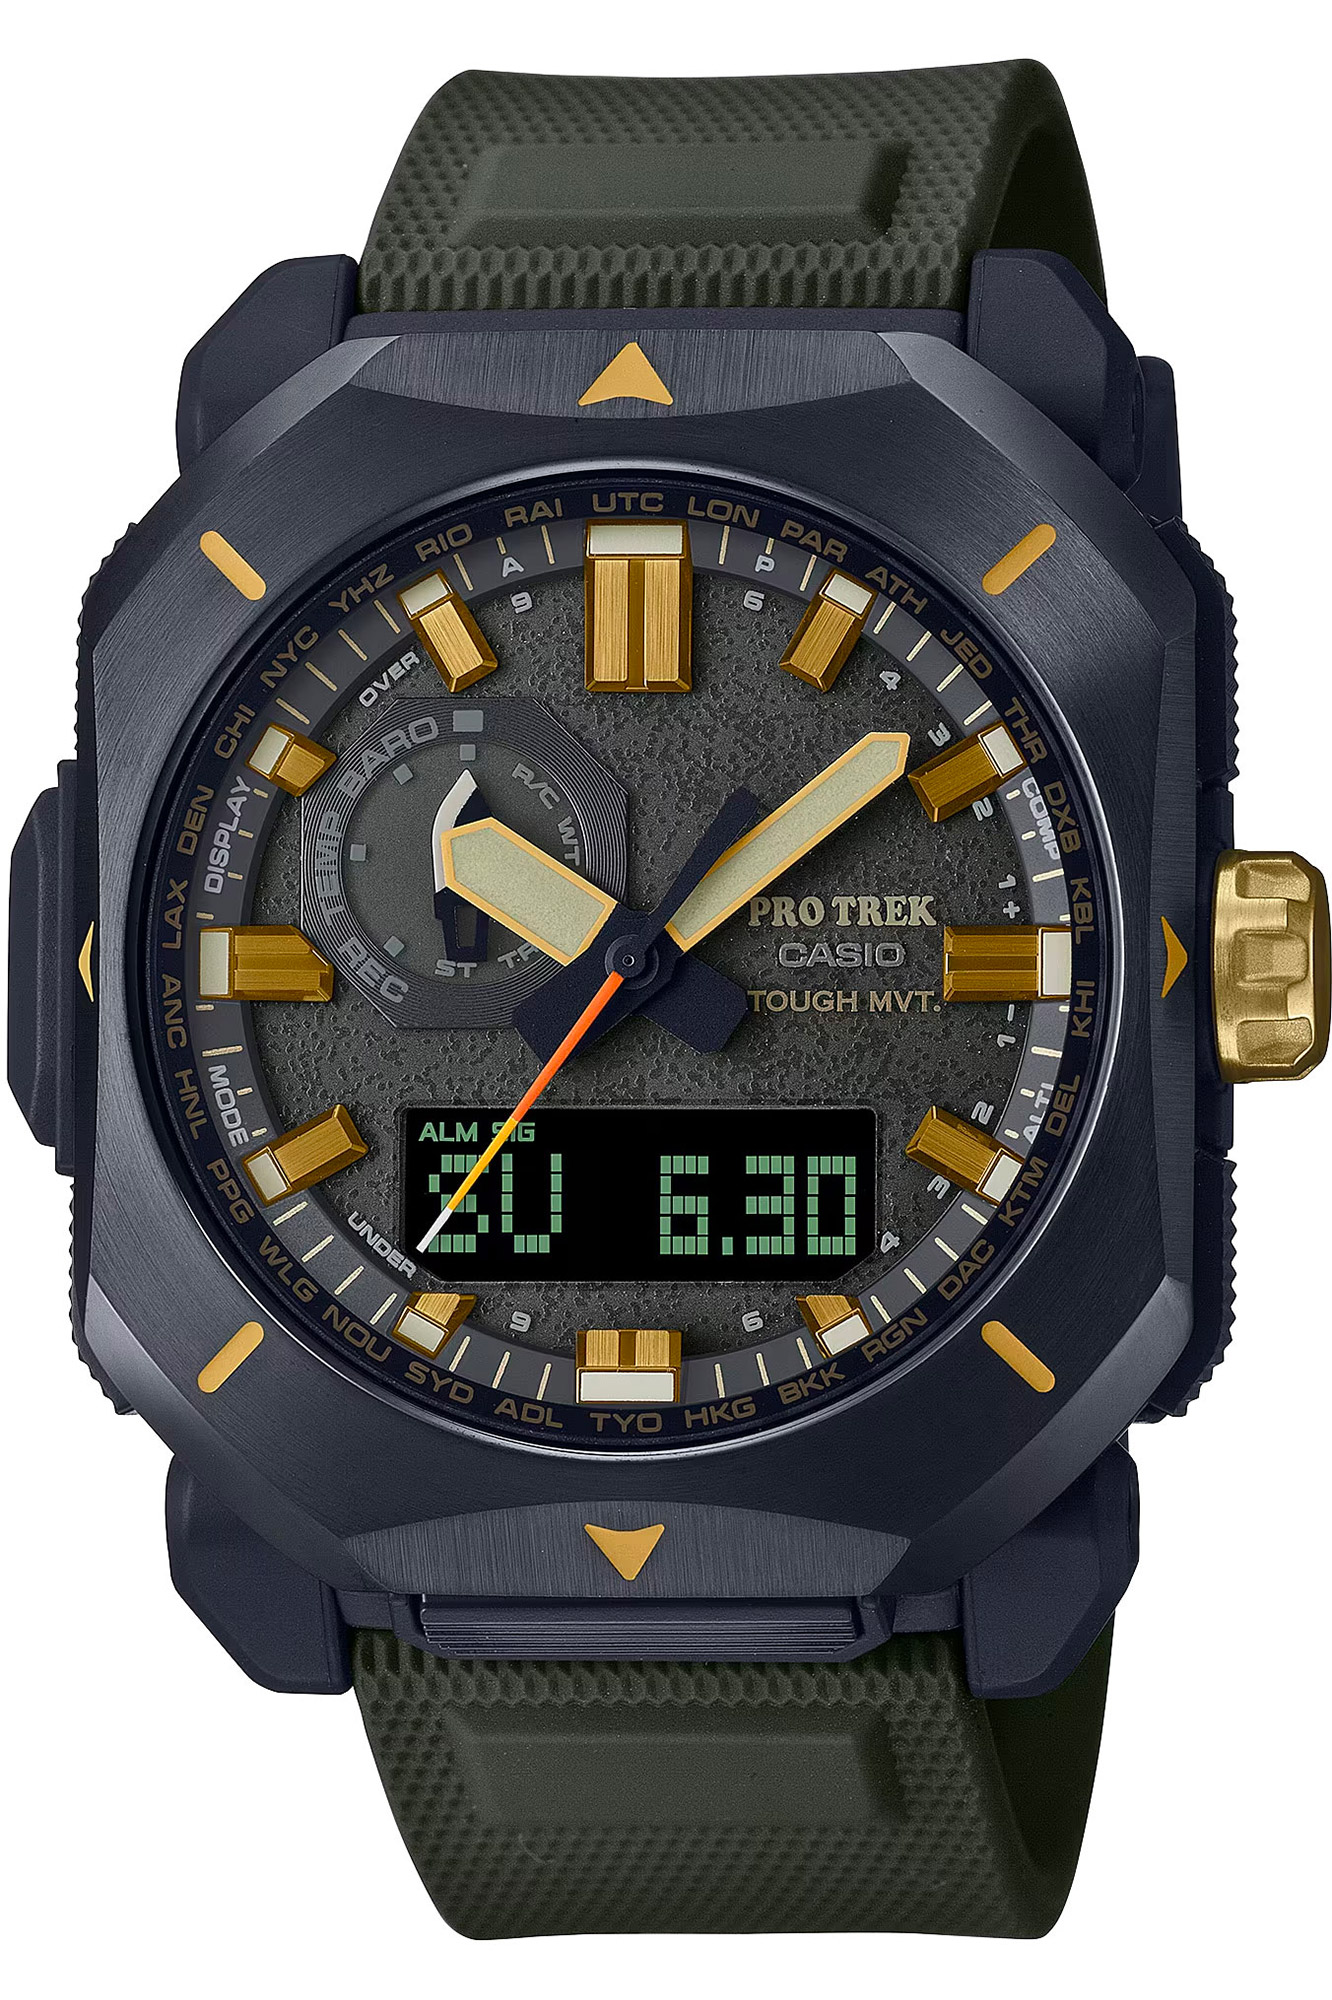 Reloj CASIO Pro-Trek prw-6900y-3er